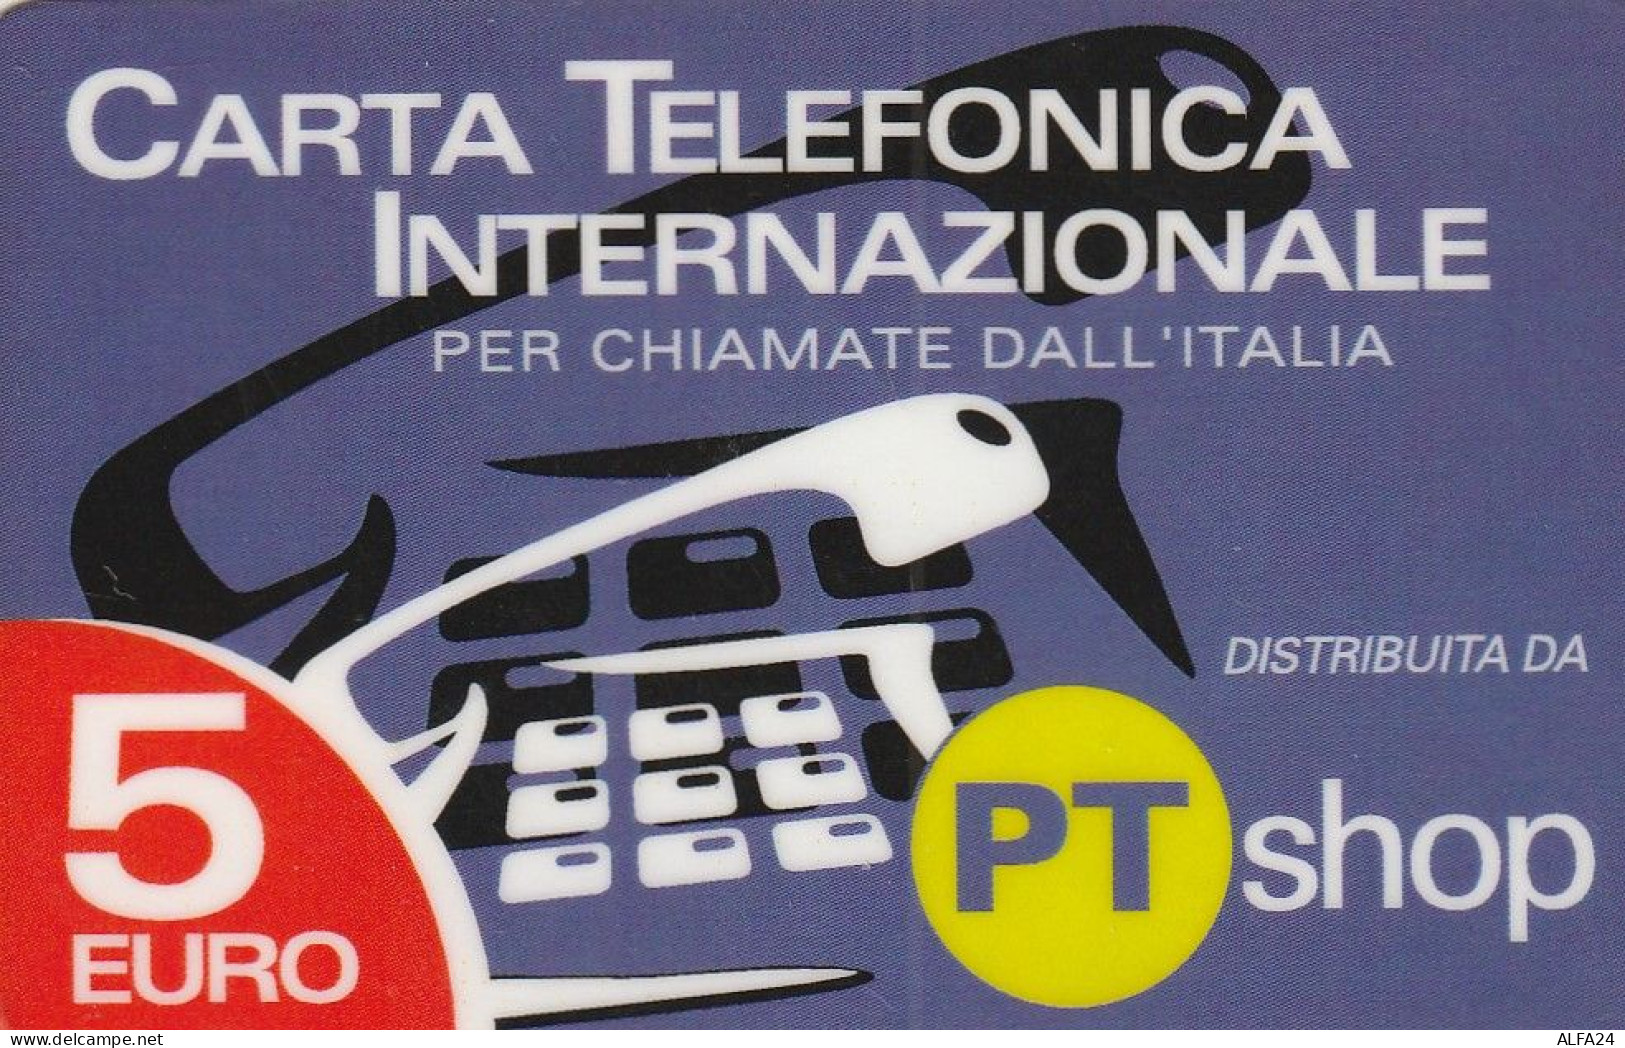 PREPAID PHONE CARD ITALIA POSTE (CZ31 - Schede GSM, Prepagate & Ricariche